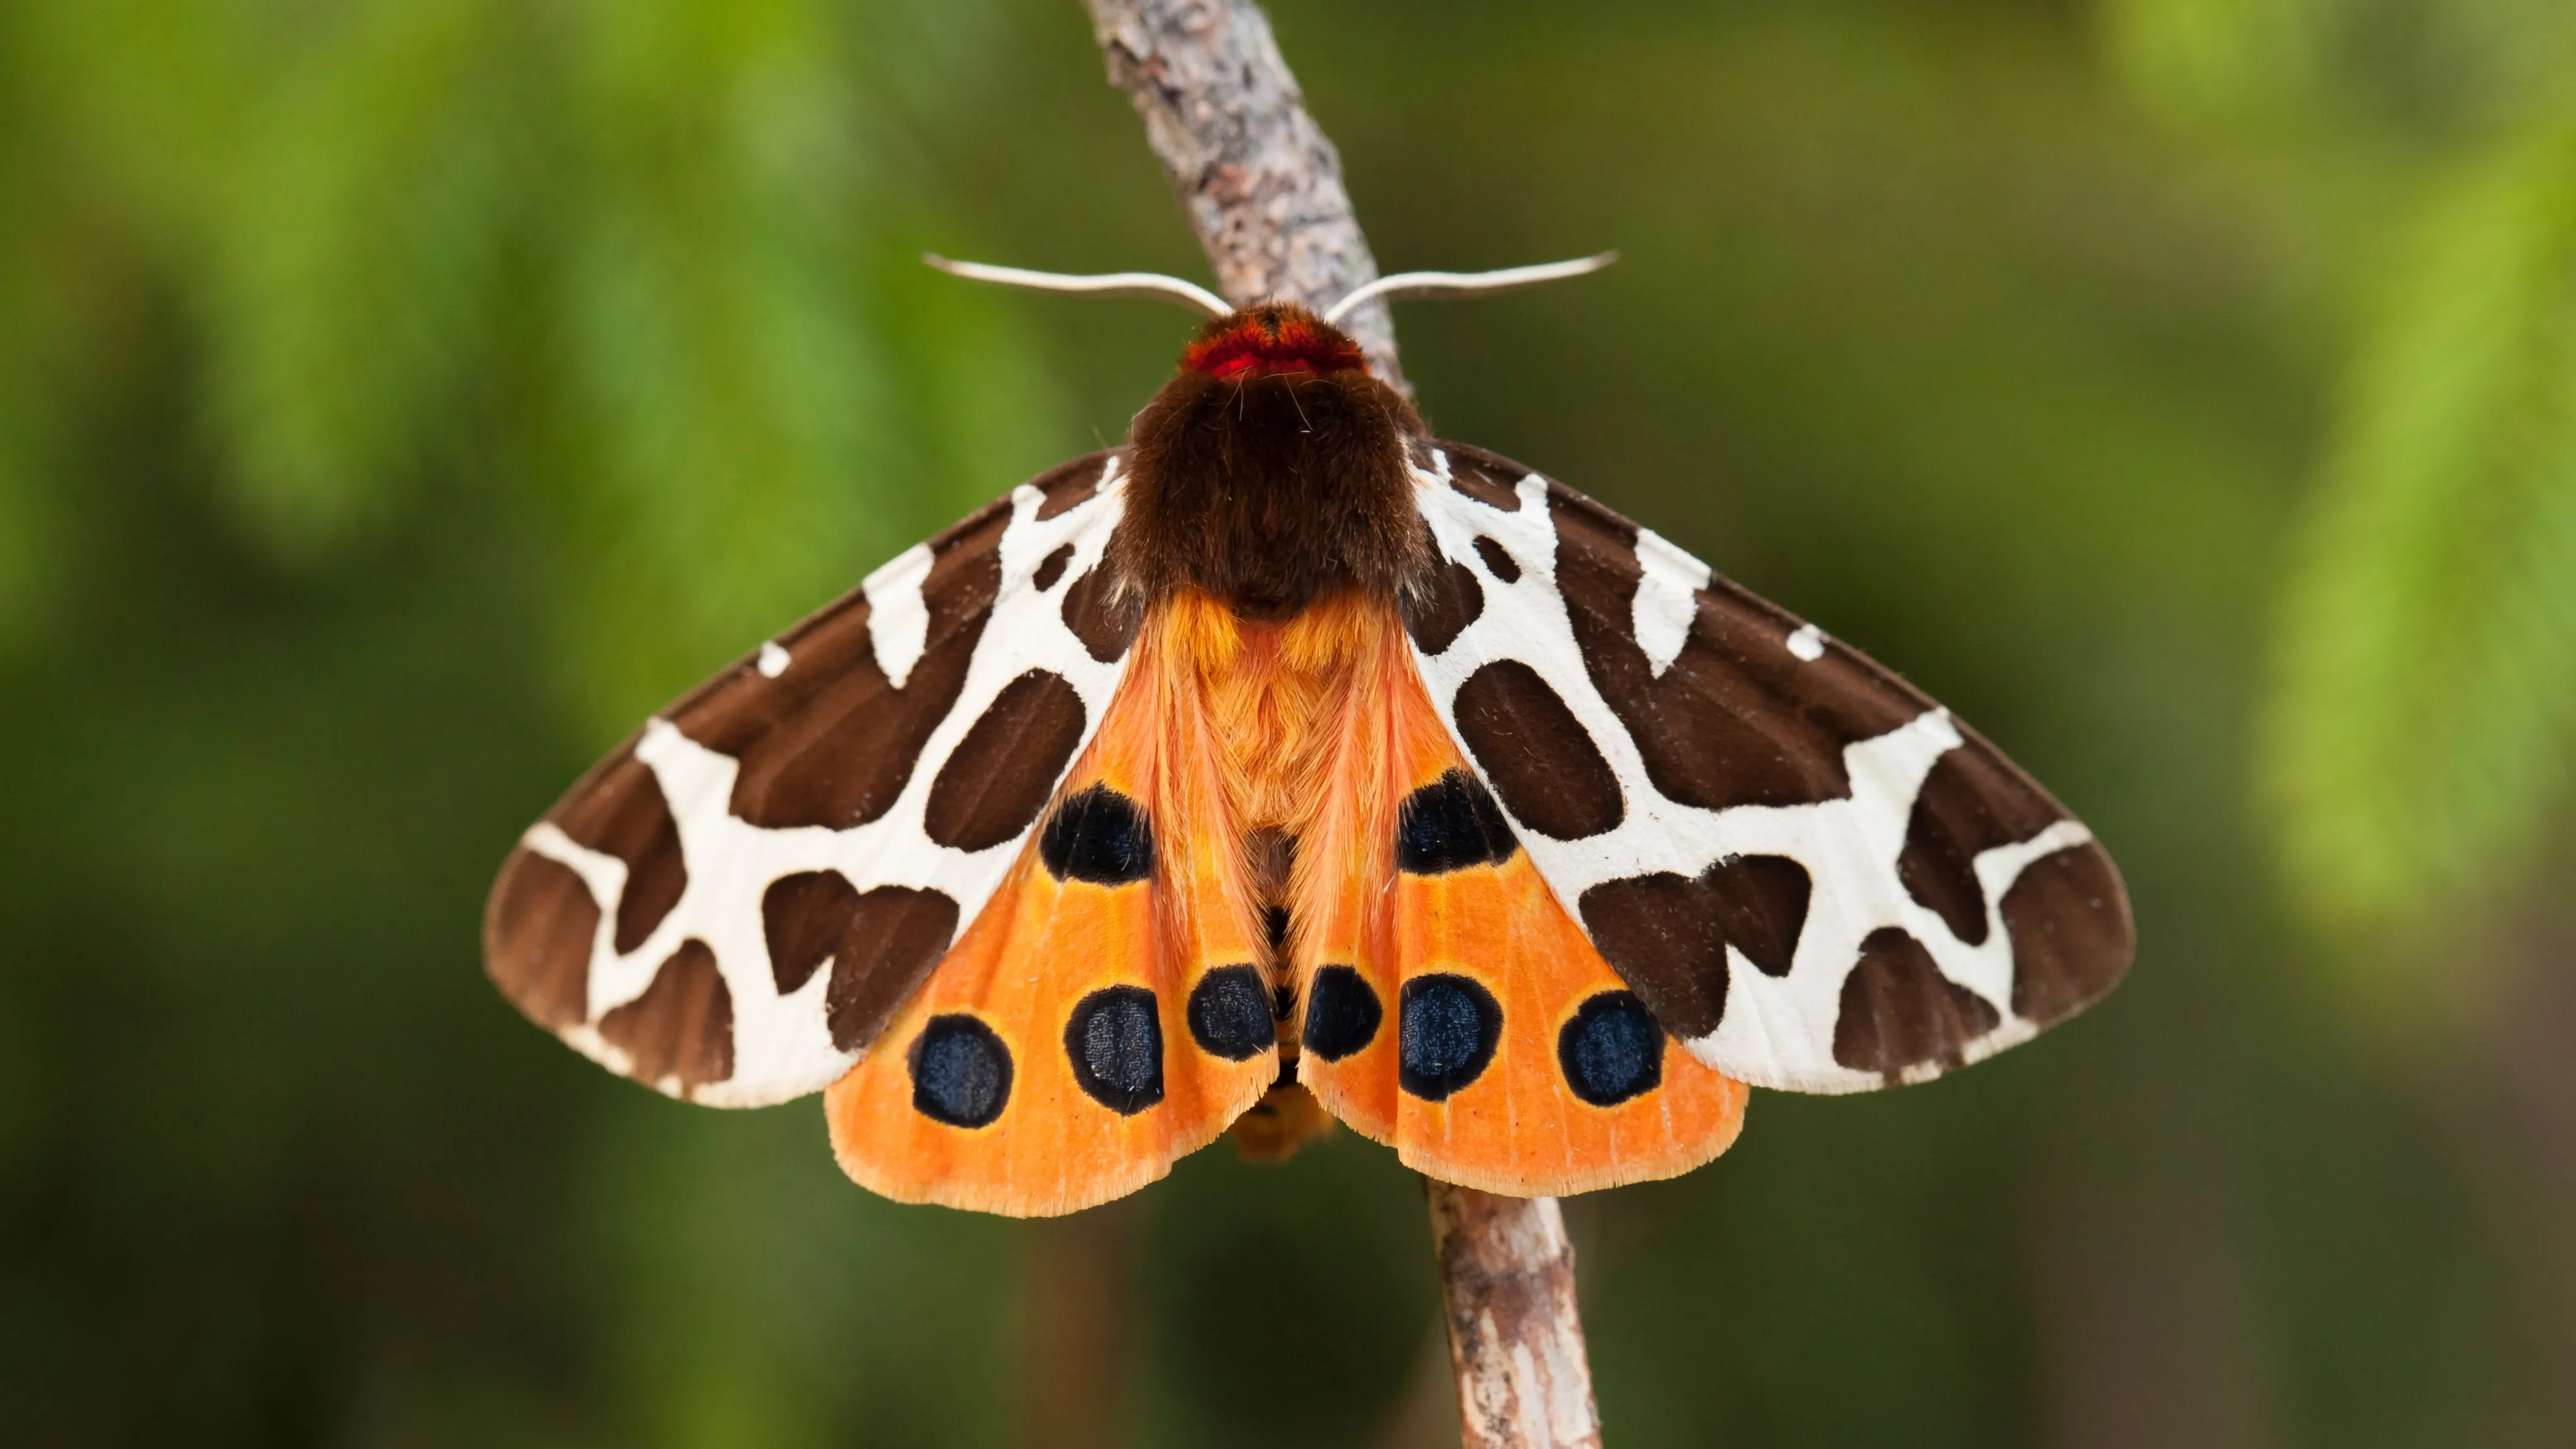 A Garden Tiger Moth perched on a twig.